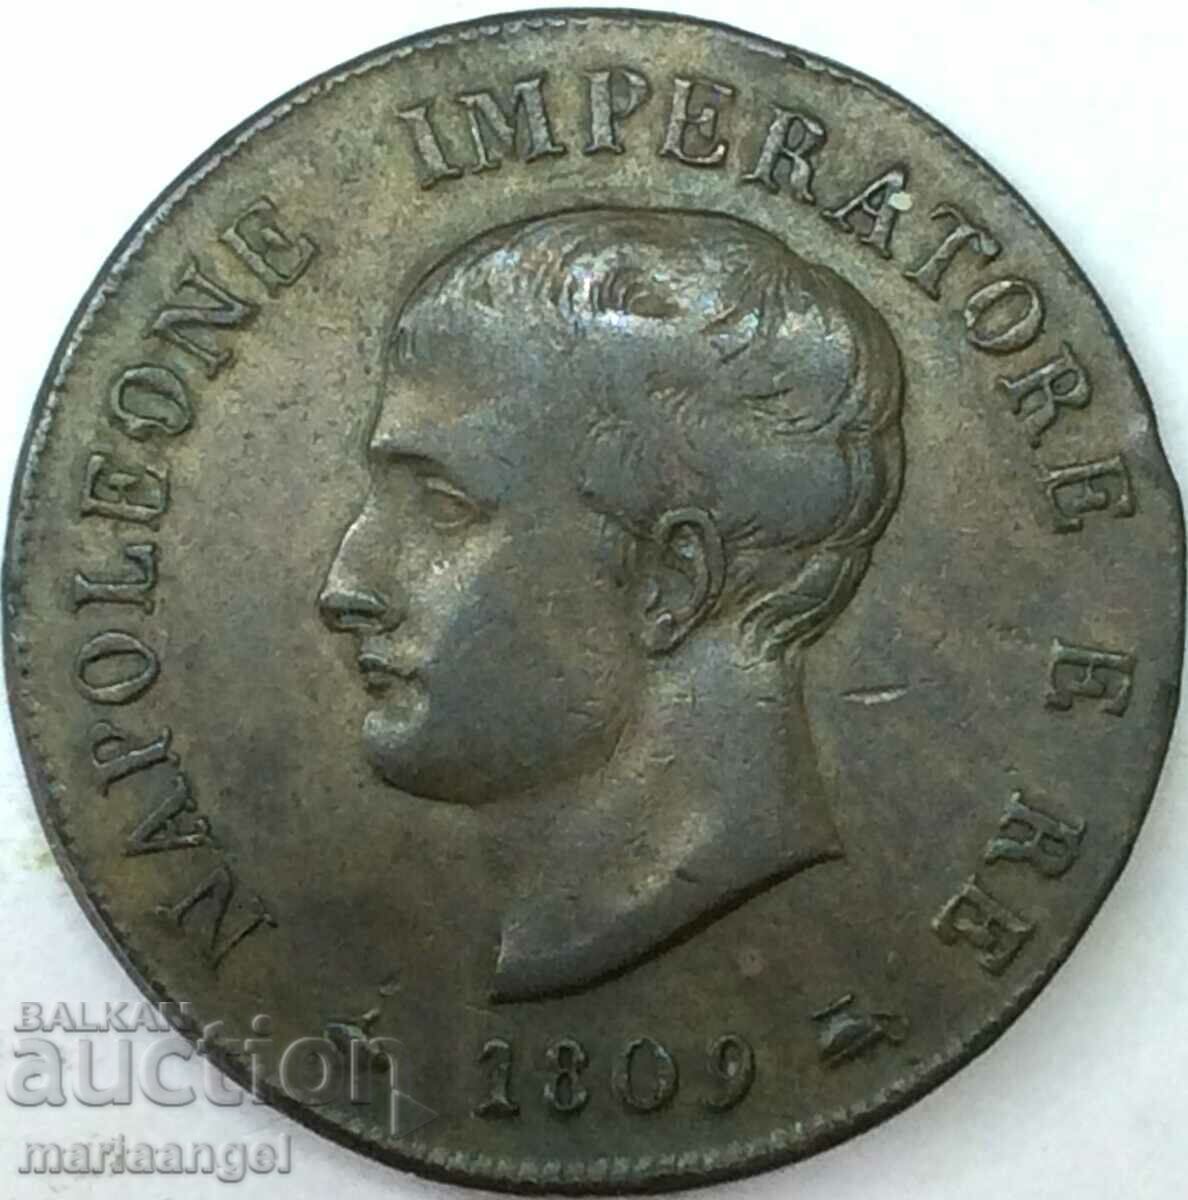 Napoleon soldo 1809 Ιταλία 10,36g 27mm χάλκινο